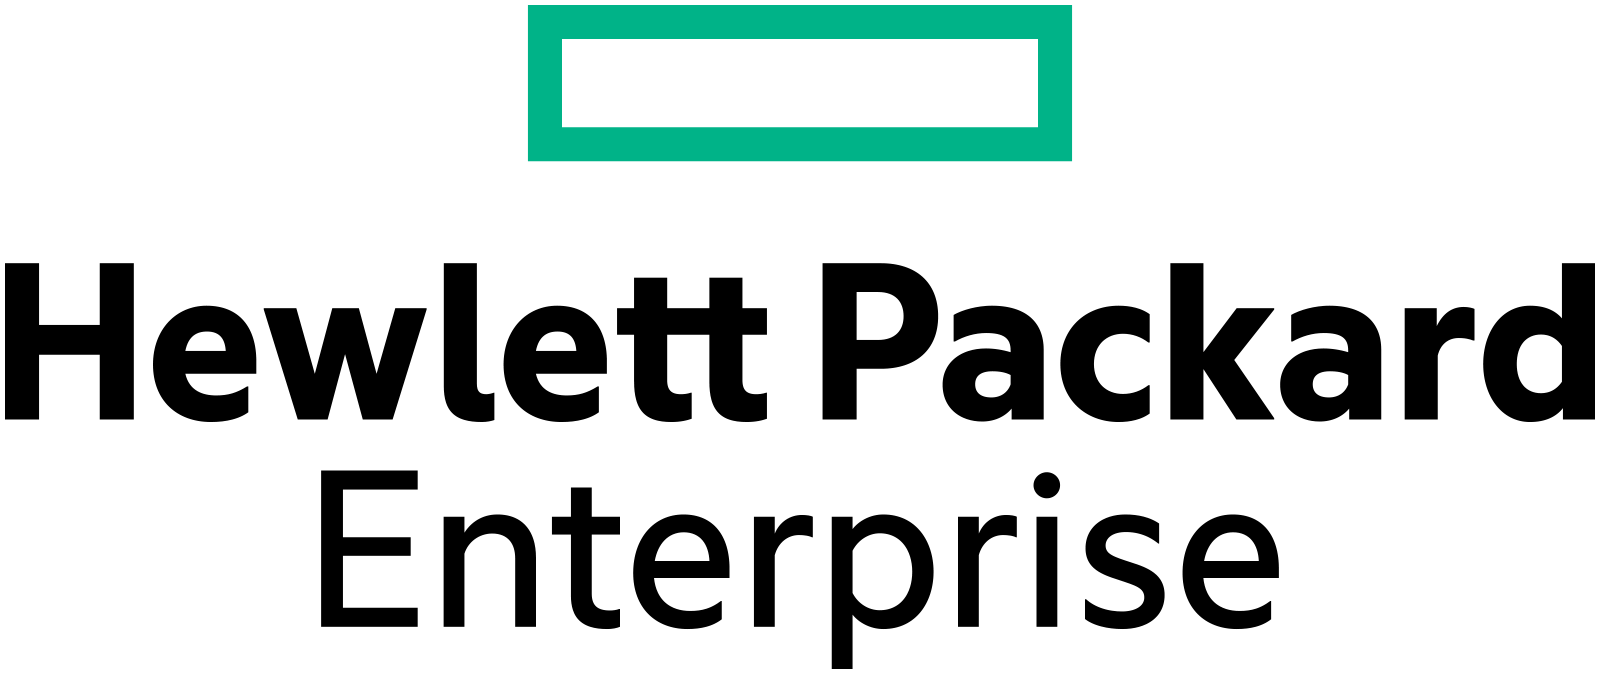 HP Enterprise Services Logo - Hewlett Packard Enterprise (HPE) Receives a Hold from BMO Capital ...